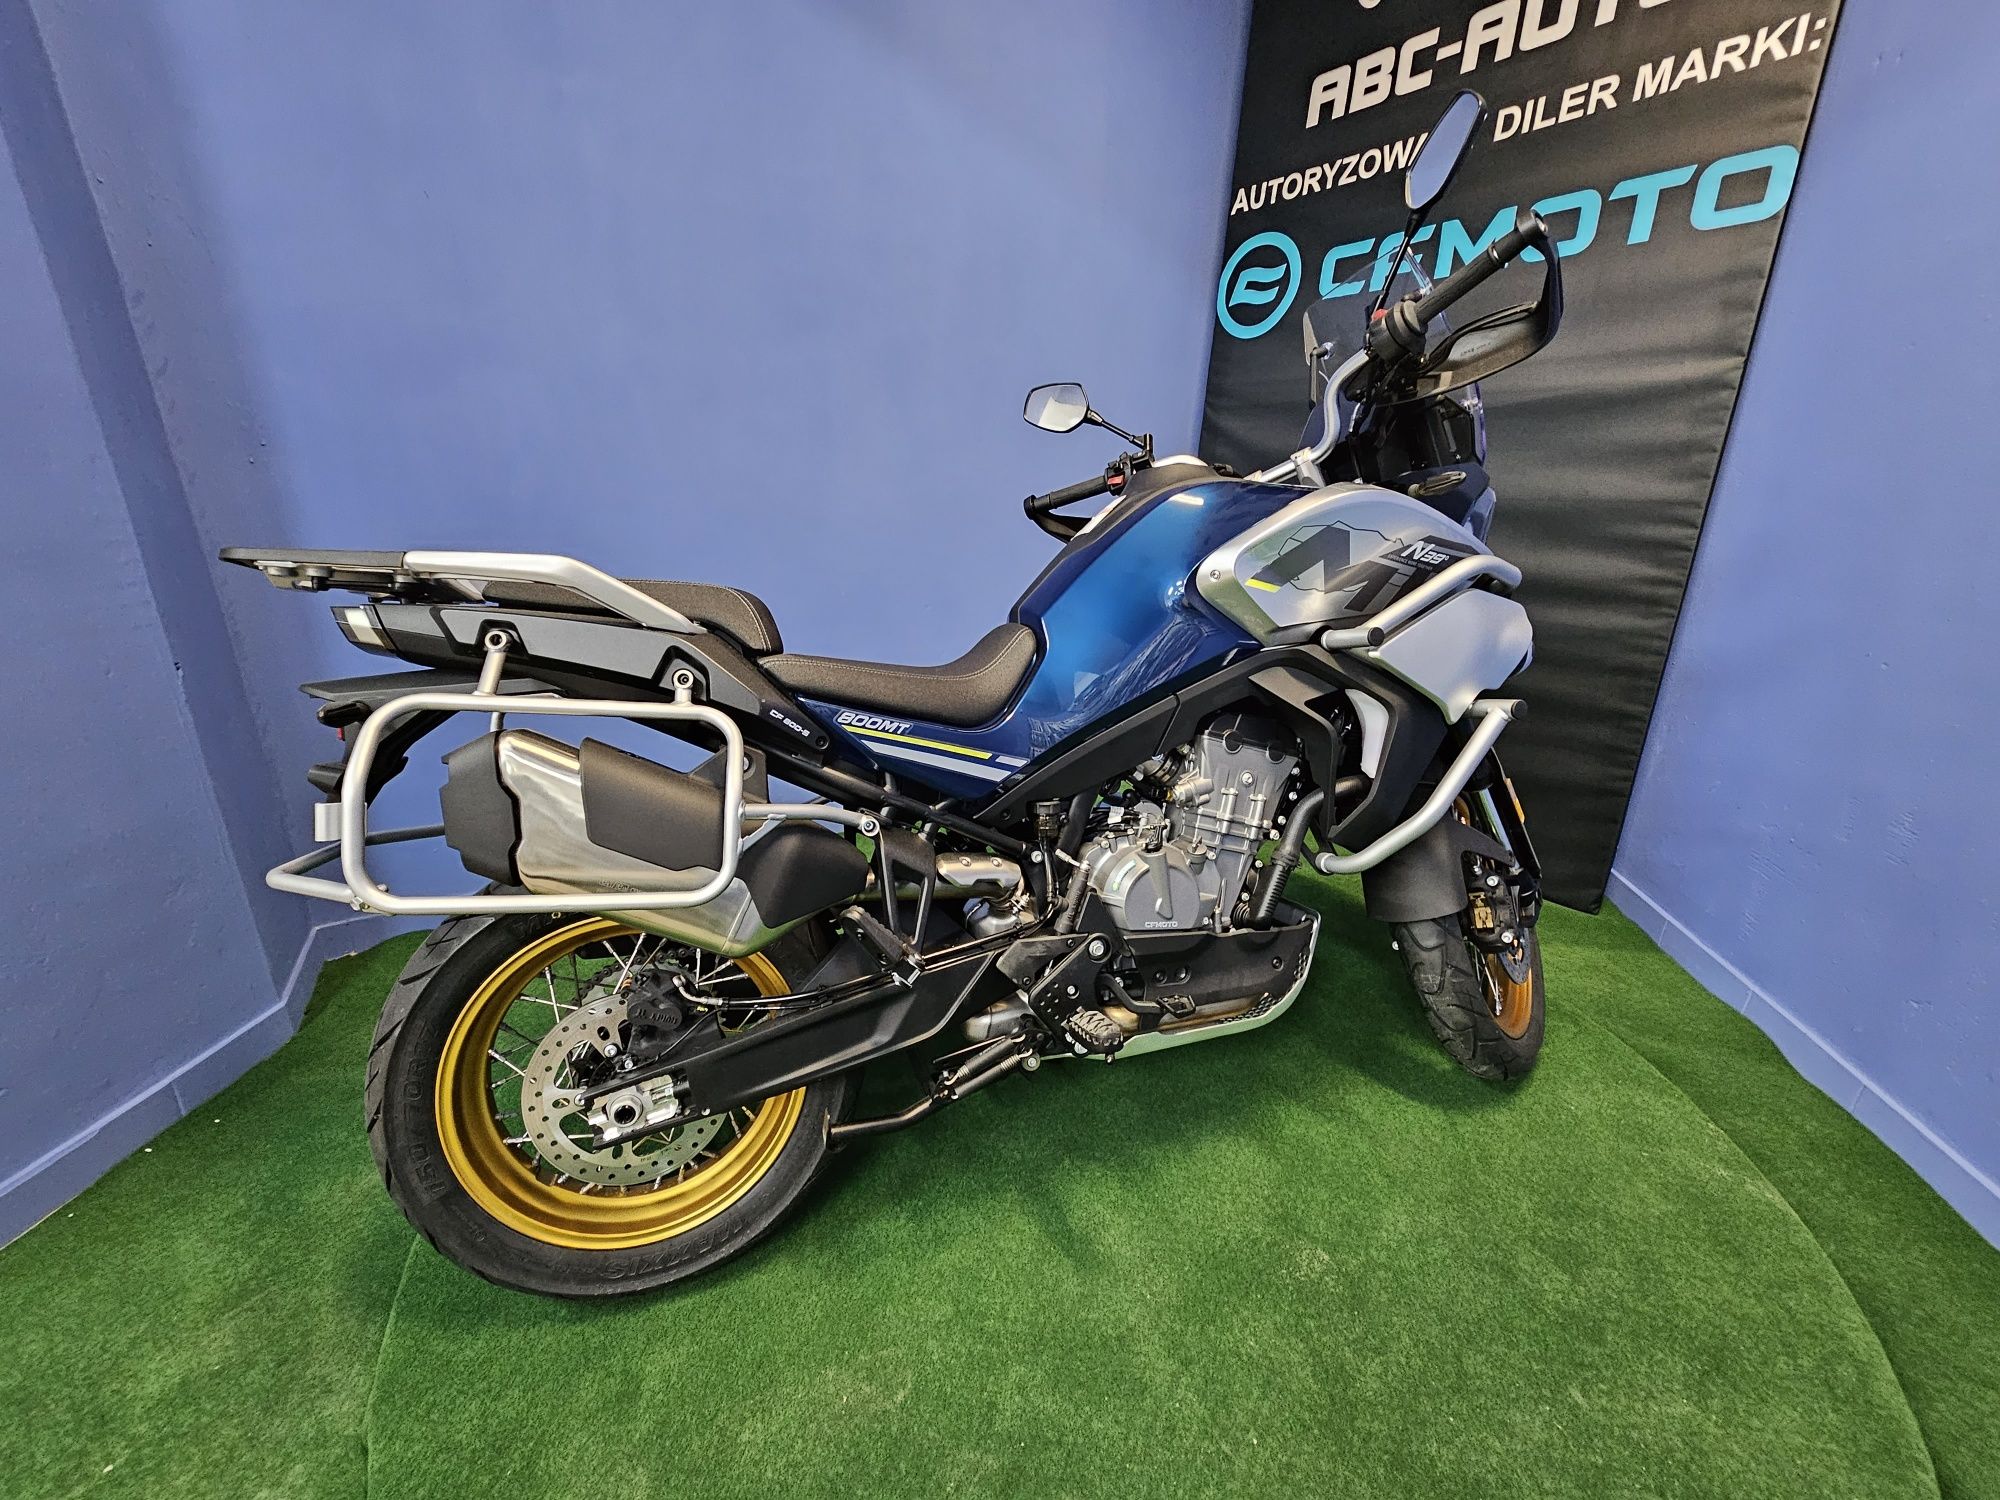 NOWY Motocykl CFMoto 800MT Touring FV vat 23% Rok 2023  CF moto 800 MT